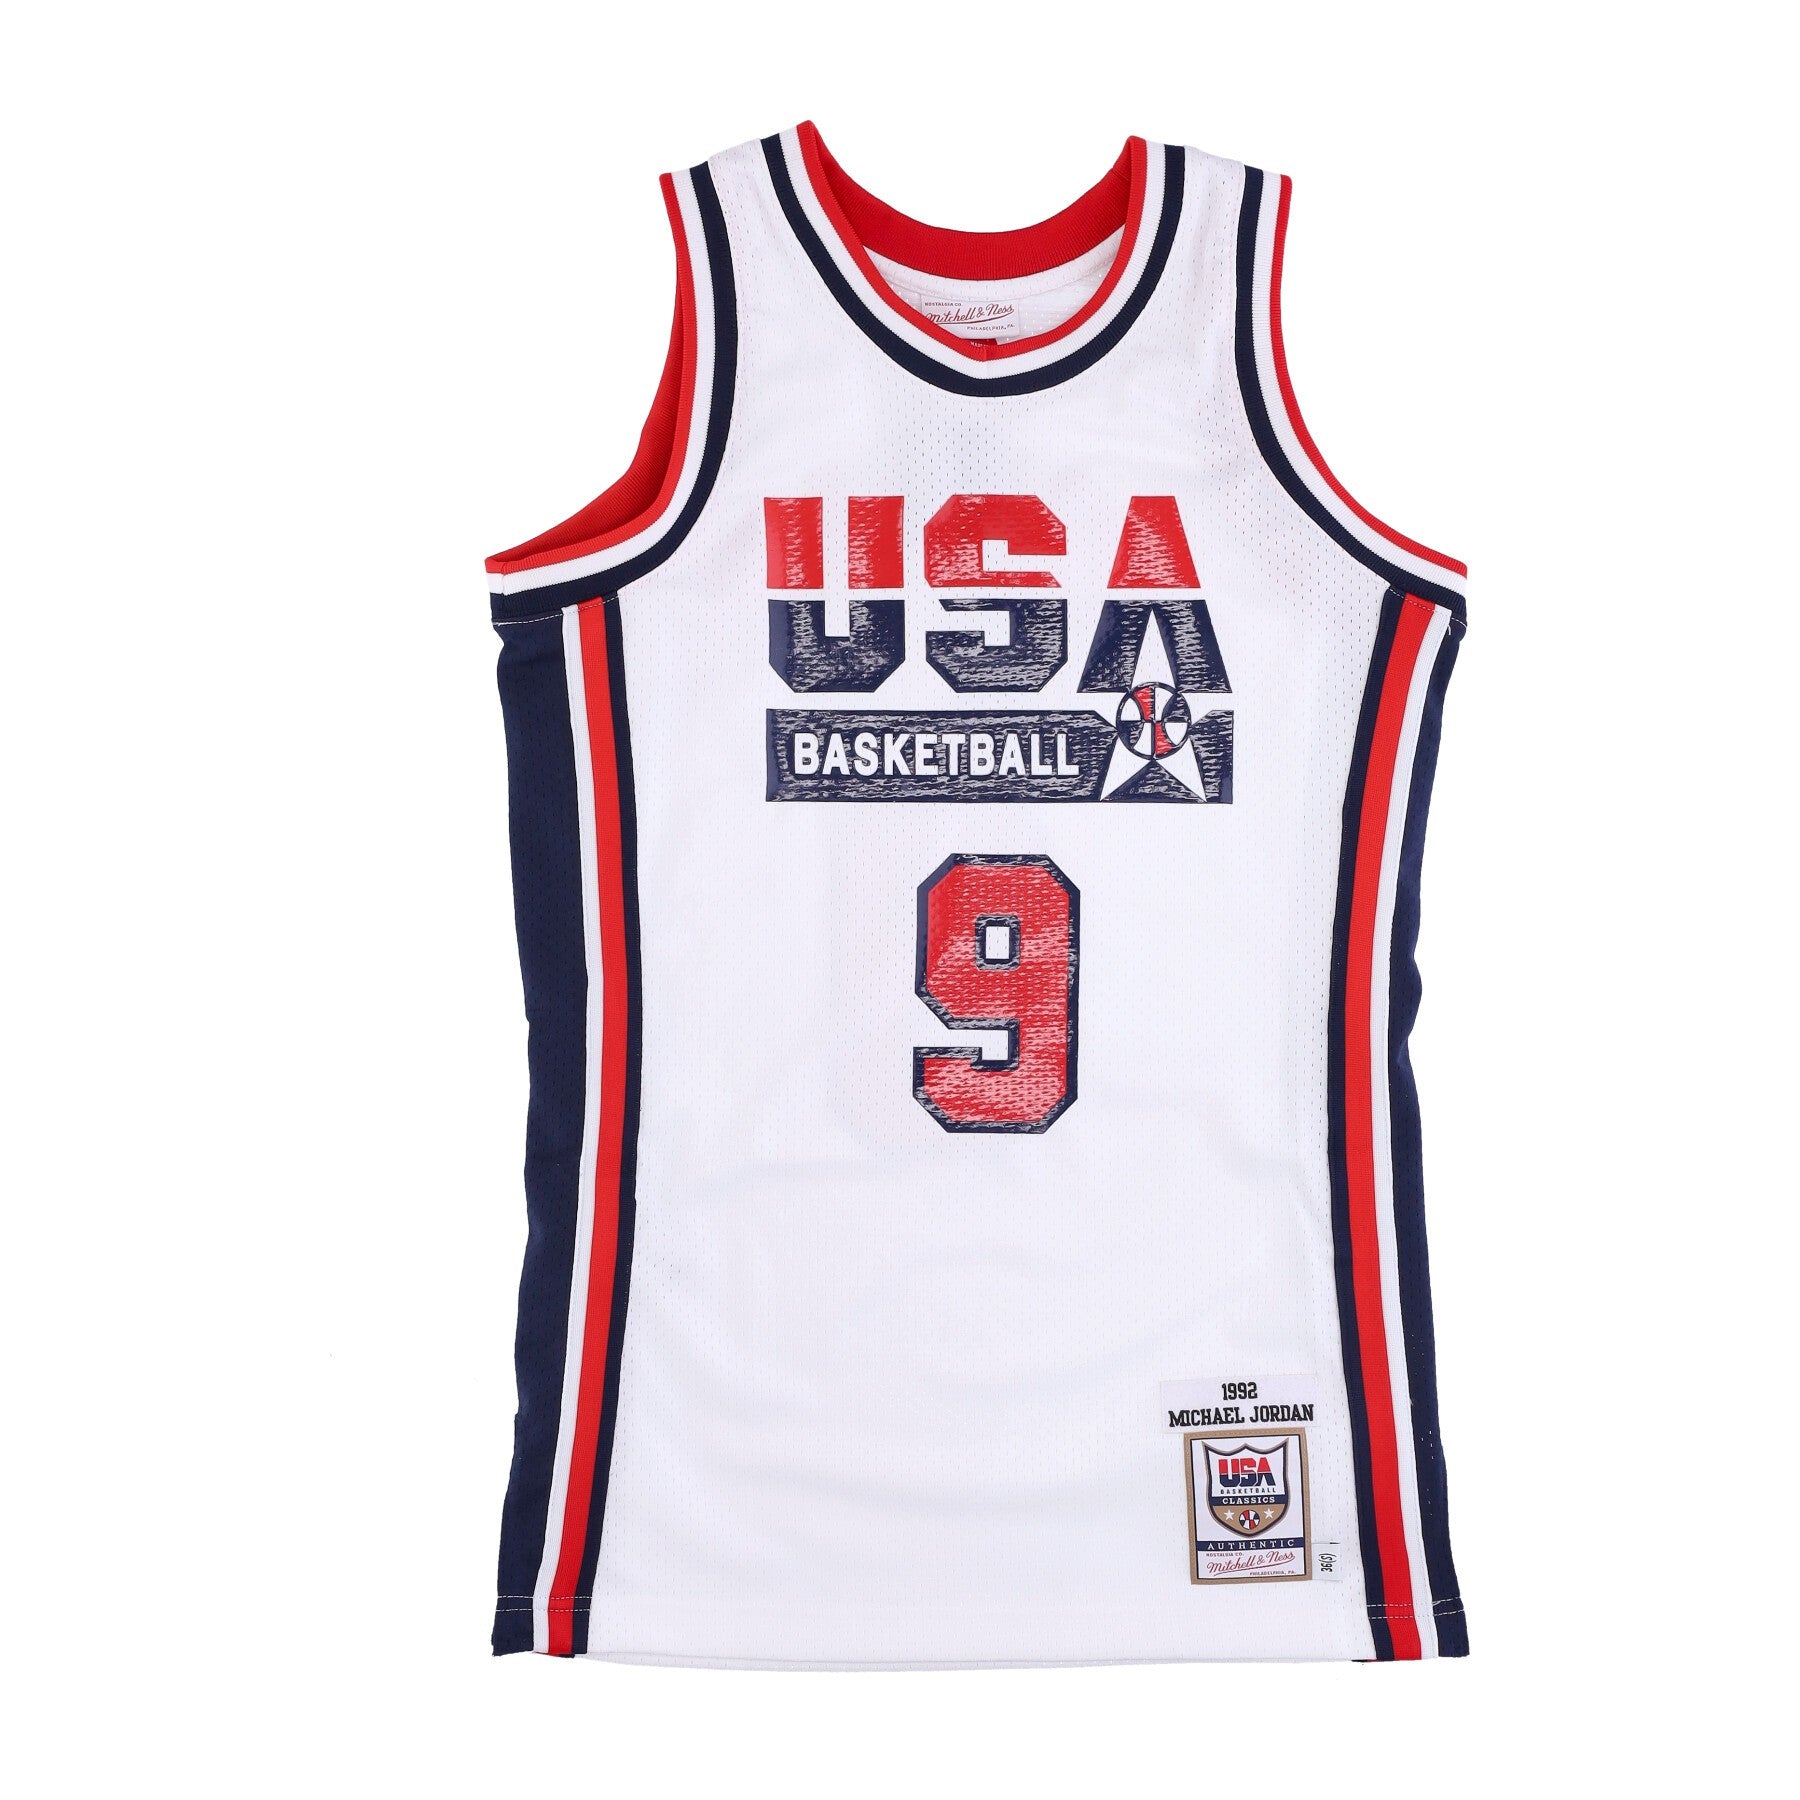 Mitchell & Ness, Canotta Basket Uomo Nba Authentic Jersey Hardwood Classics No 9 Michael Jordan 1992 Team Usa, White